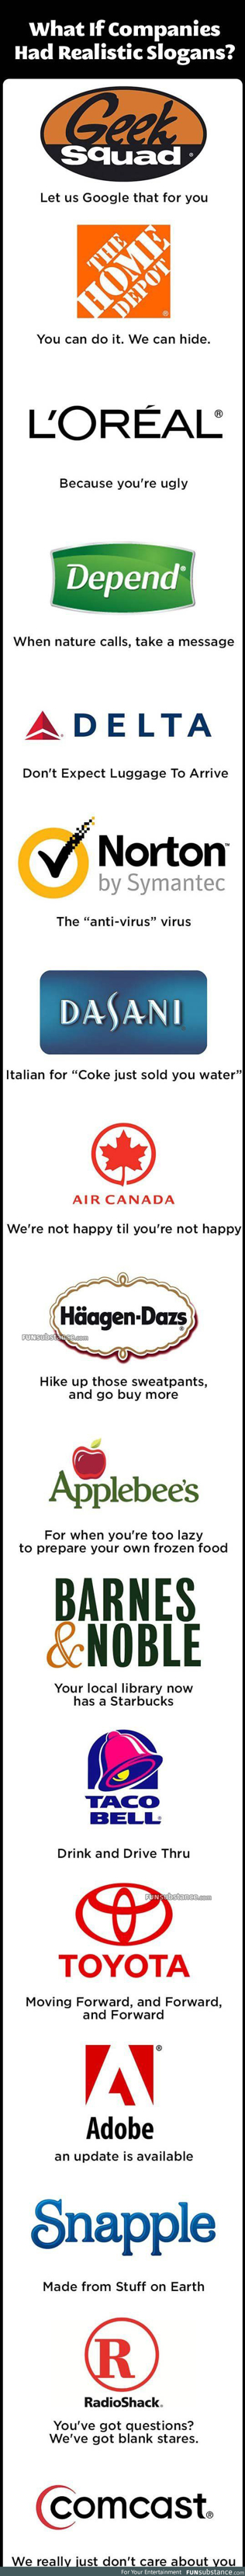 If companies had realistic slogans